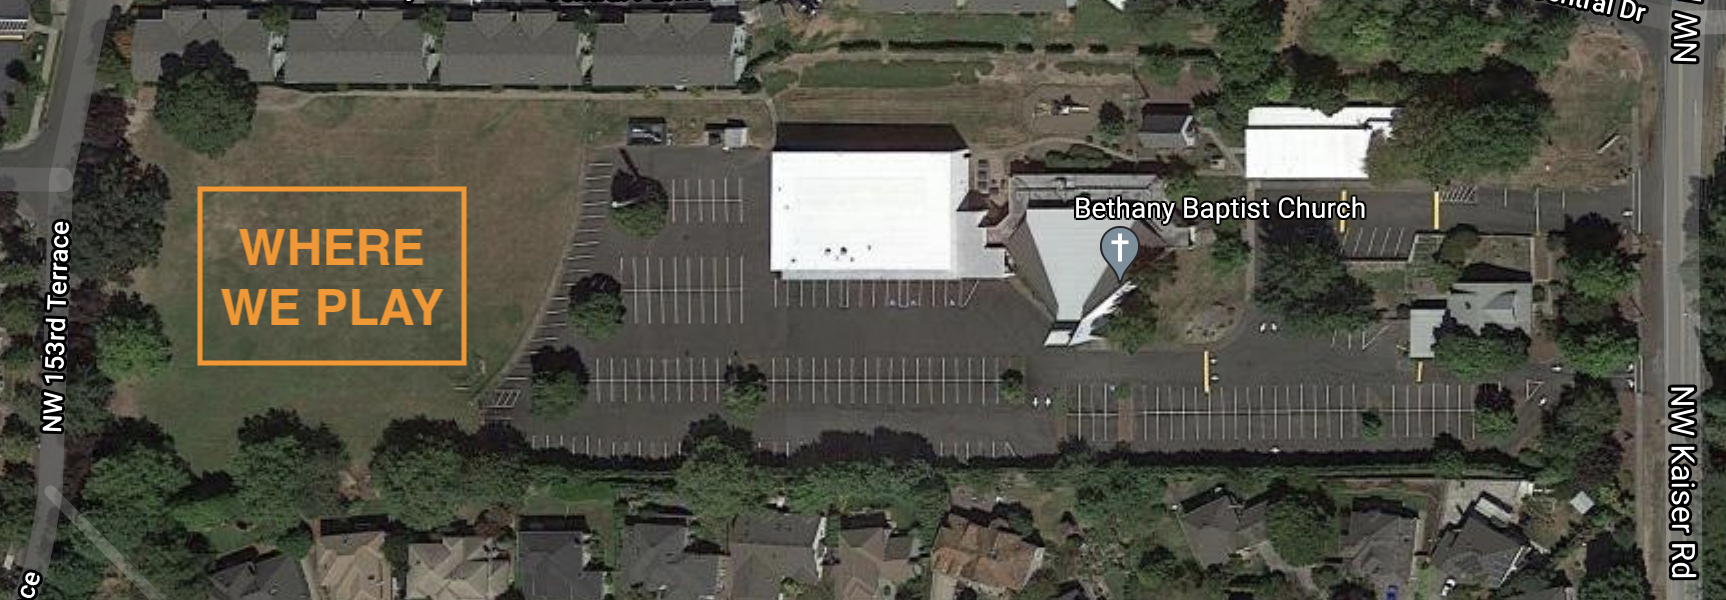 Where We Play - Bethany Baptist Church